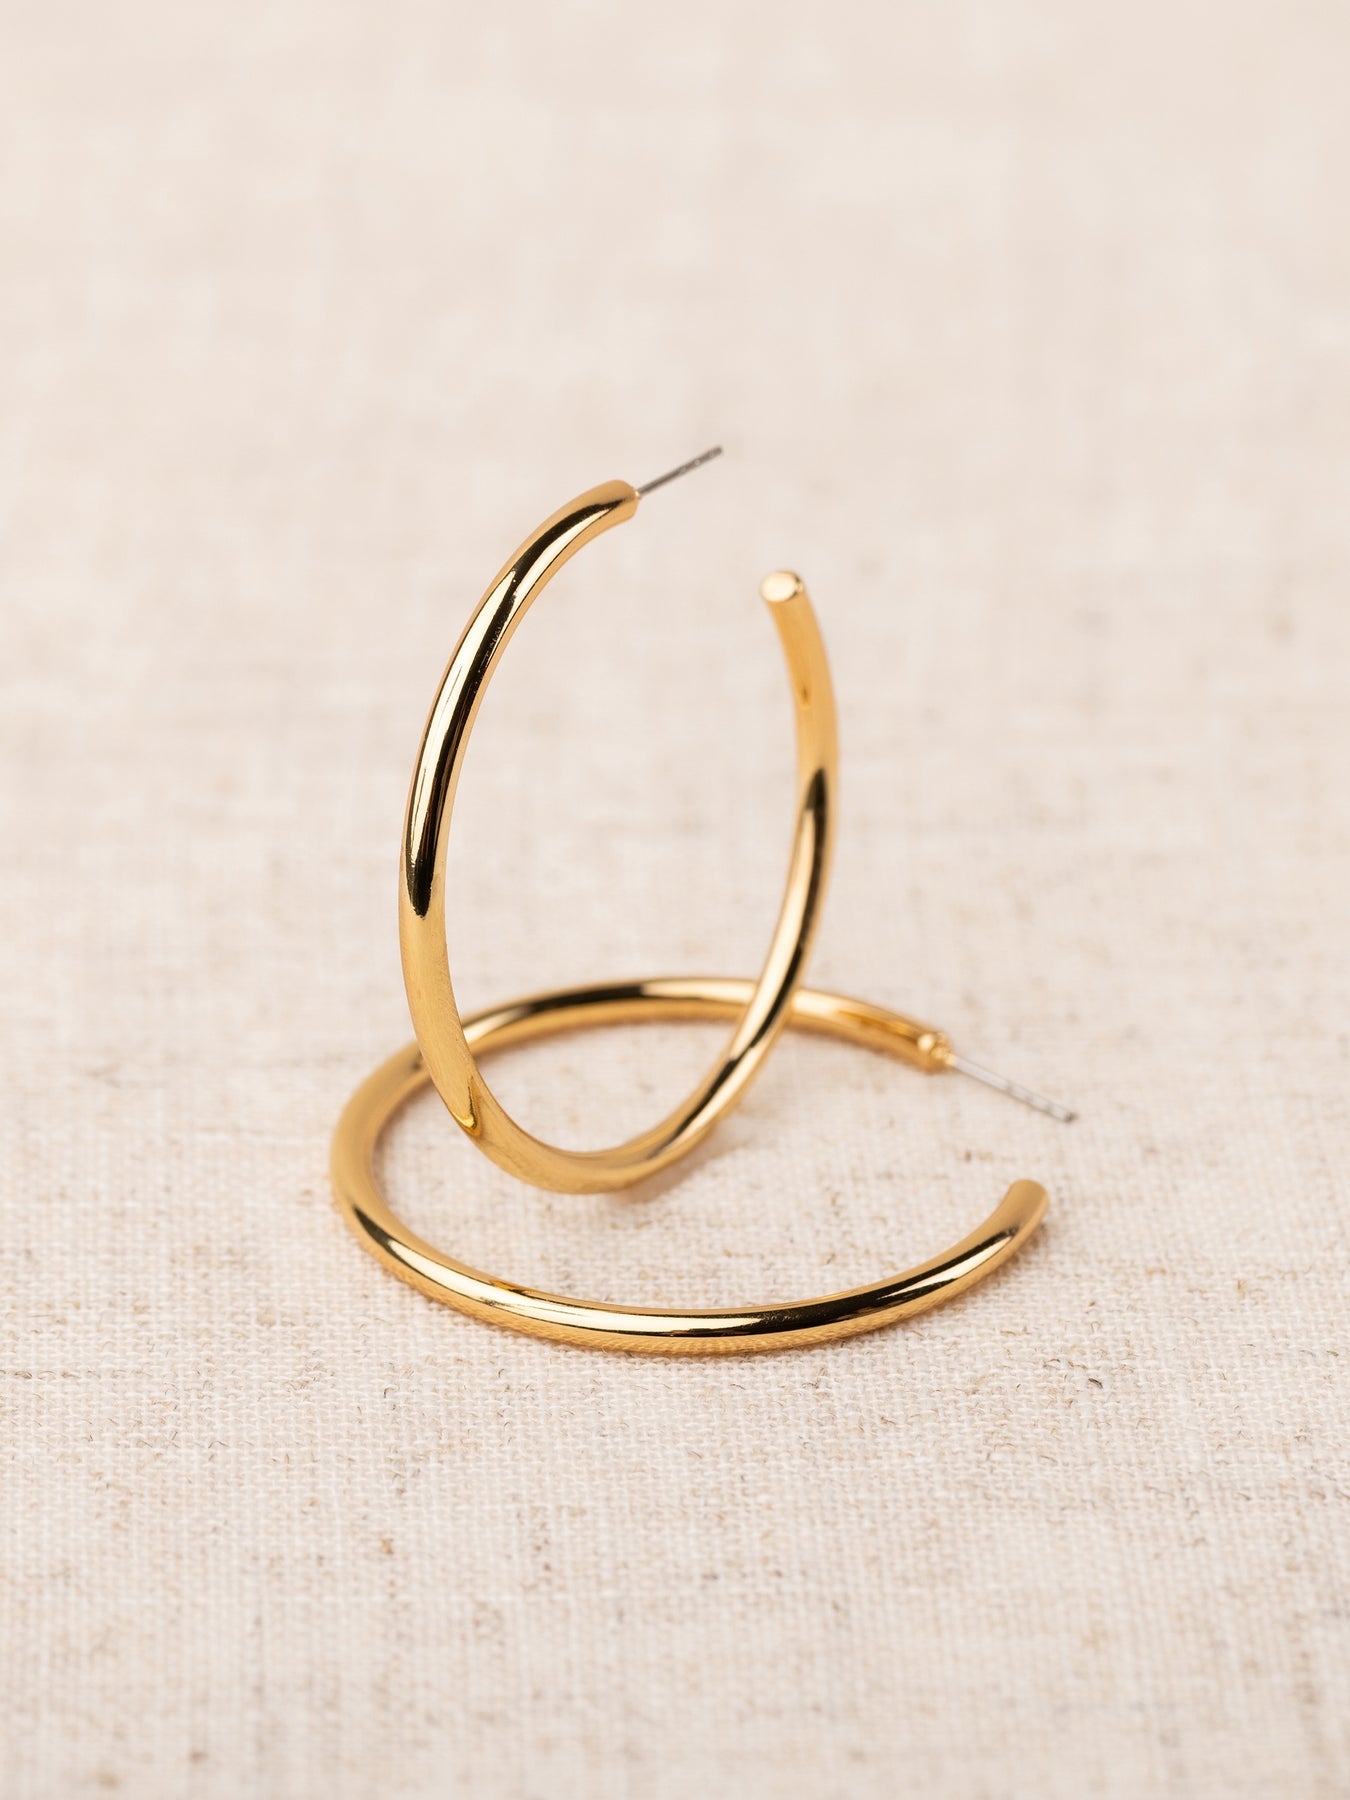 Michelle McDowell - Estonia Earrings - Shiny Gold